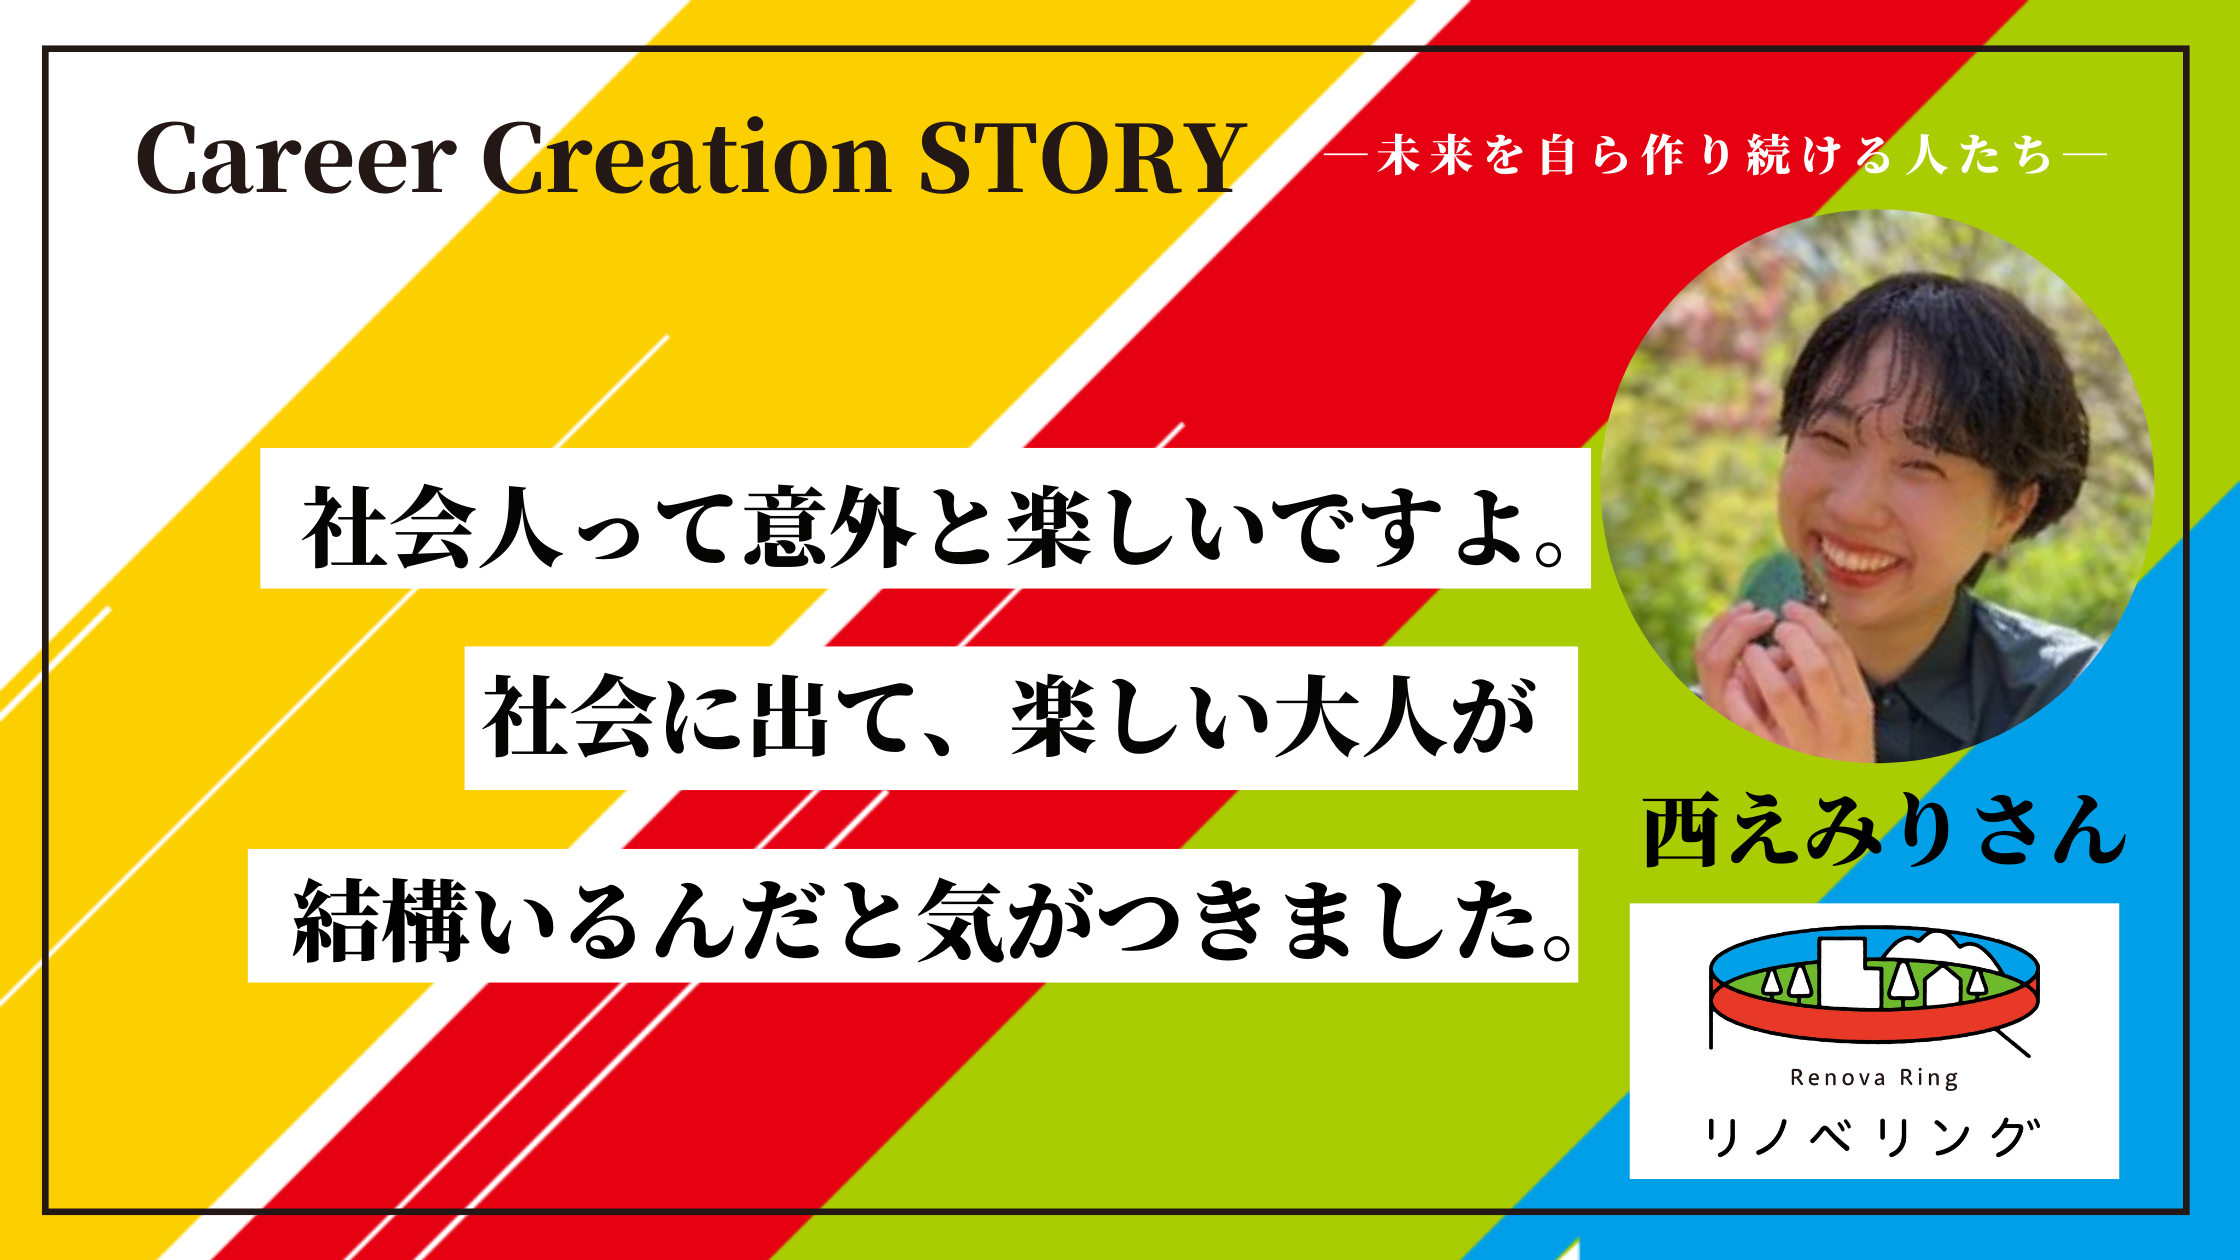 Career Creation STORY #11：（株）イトーキ 永井貴之さん